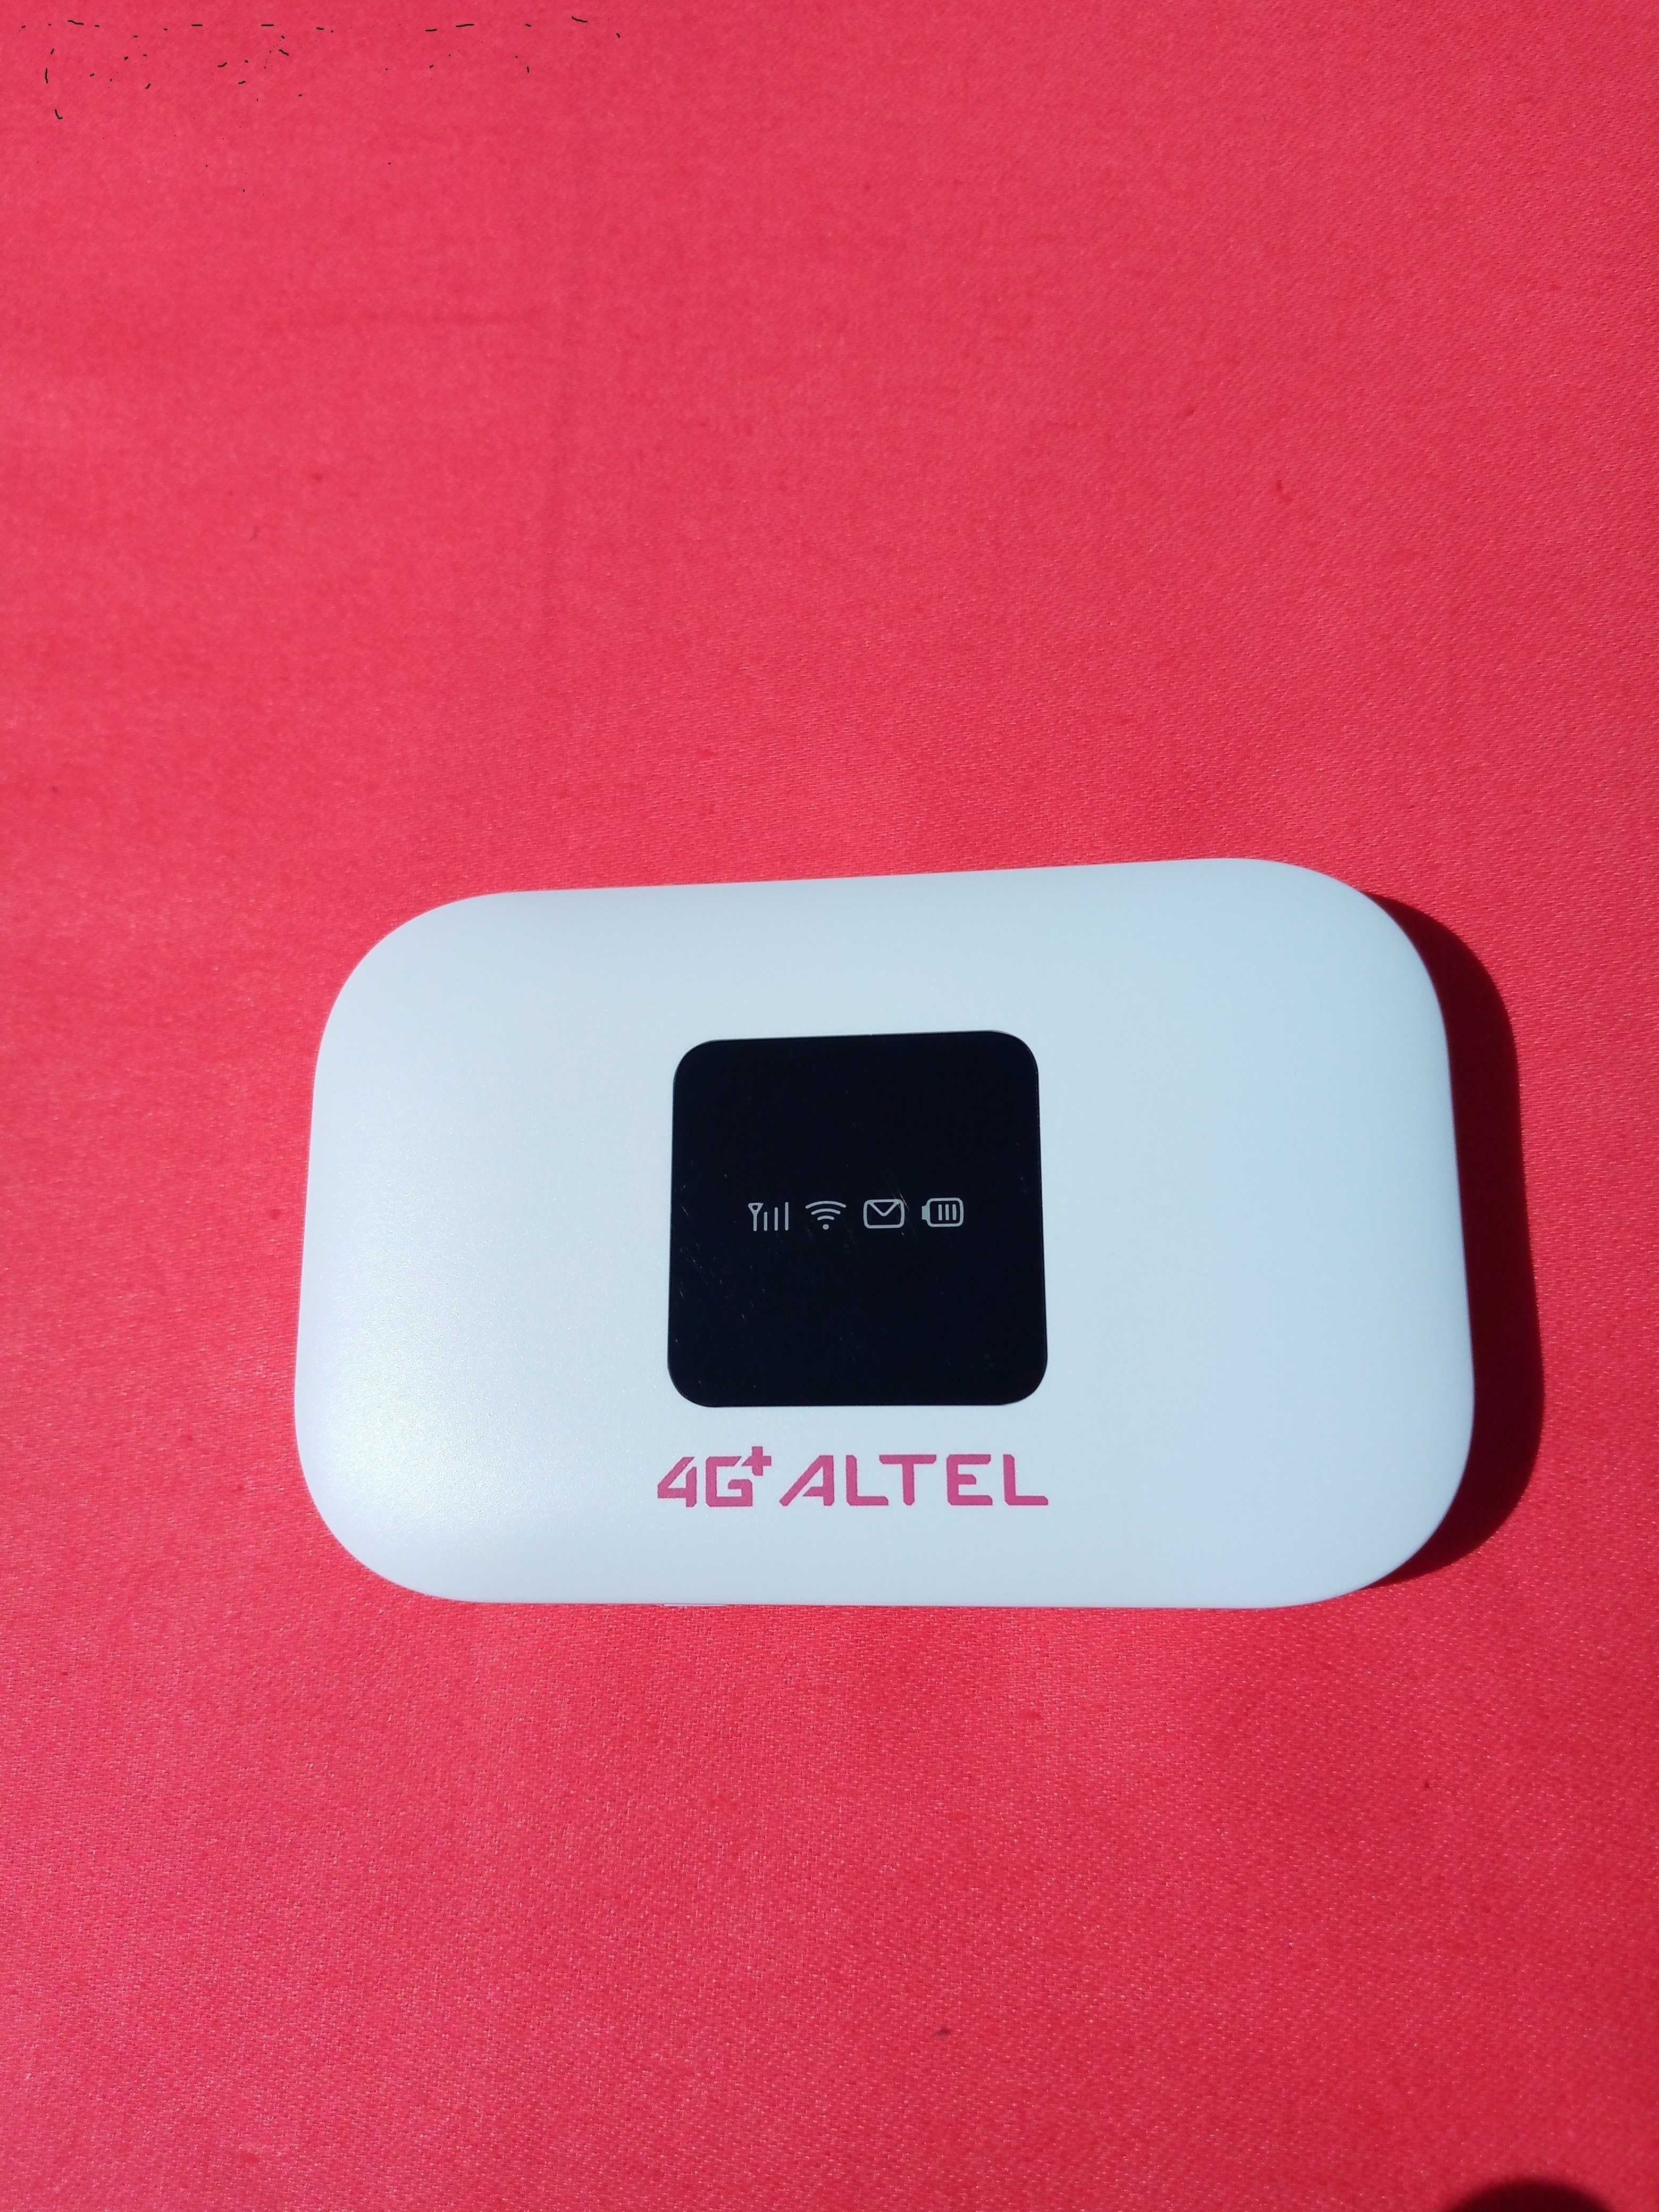 аккумулятор новый билайн актив алтел теле2 роутер модем вайфай wifi